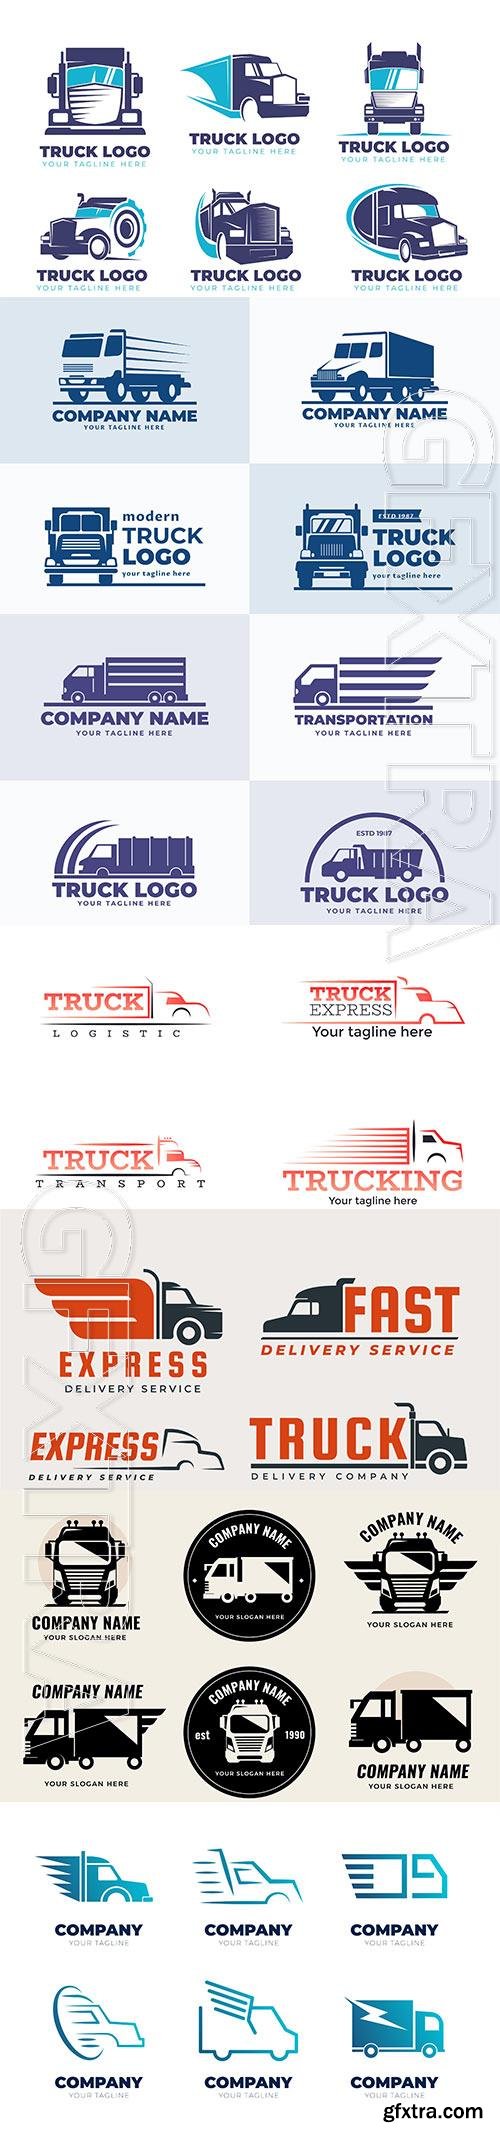 Truck logo vector design